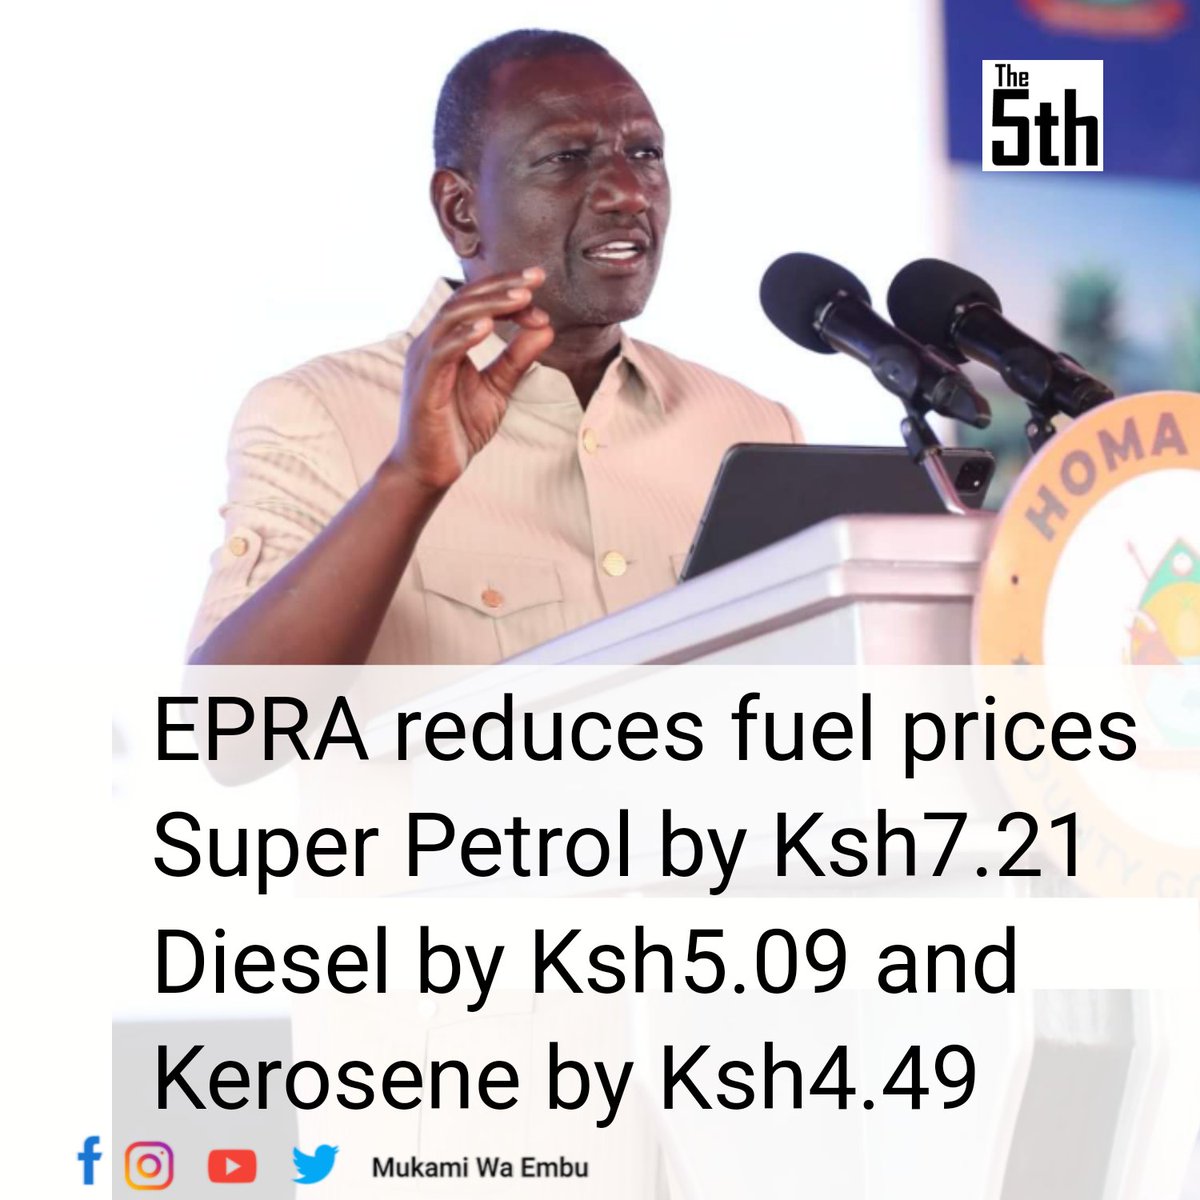 EPRA reduces fuel prices Super Petrol by Ksh7.21, Diesel by Ksh5.09 and Kerosene by Ksh4.49 #The5th